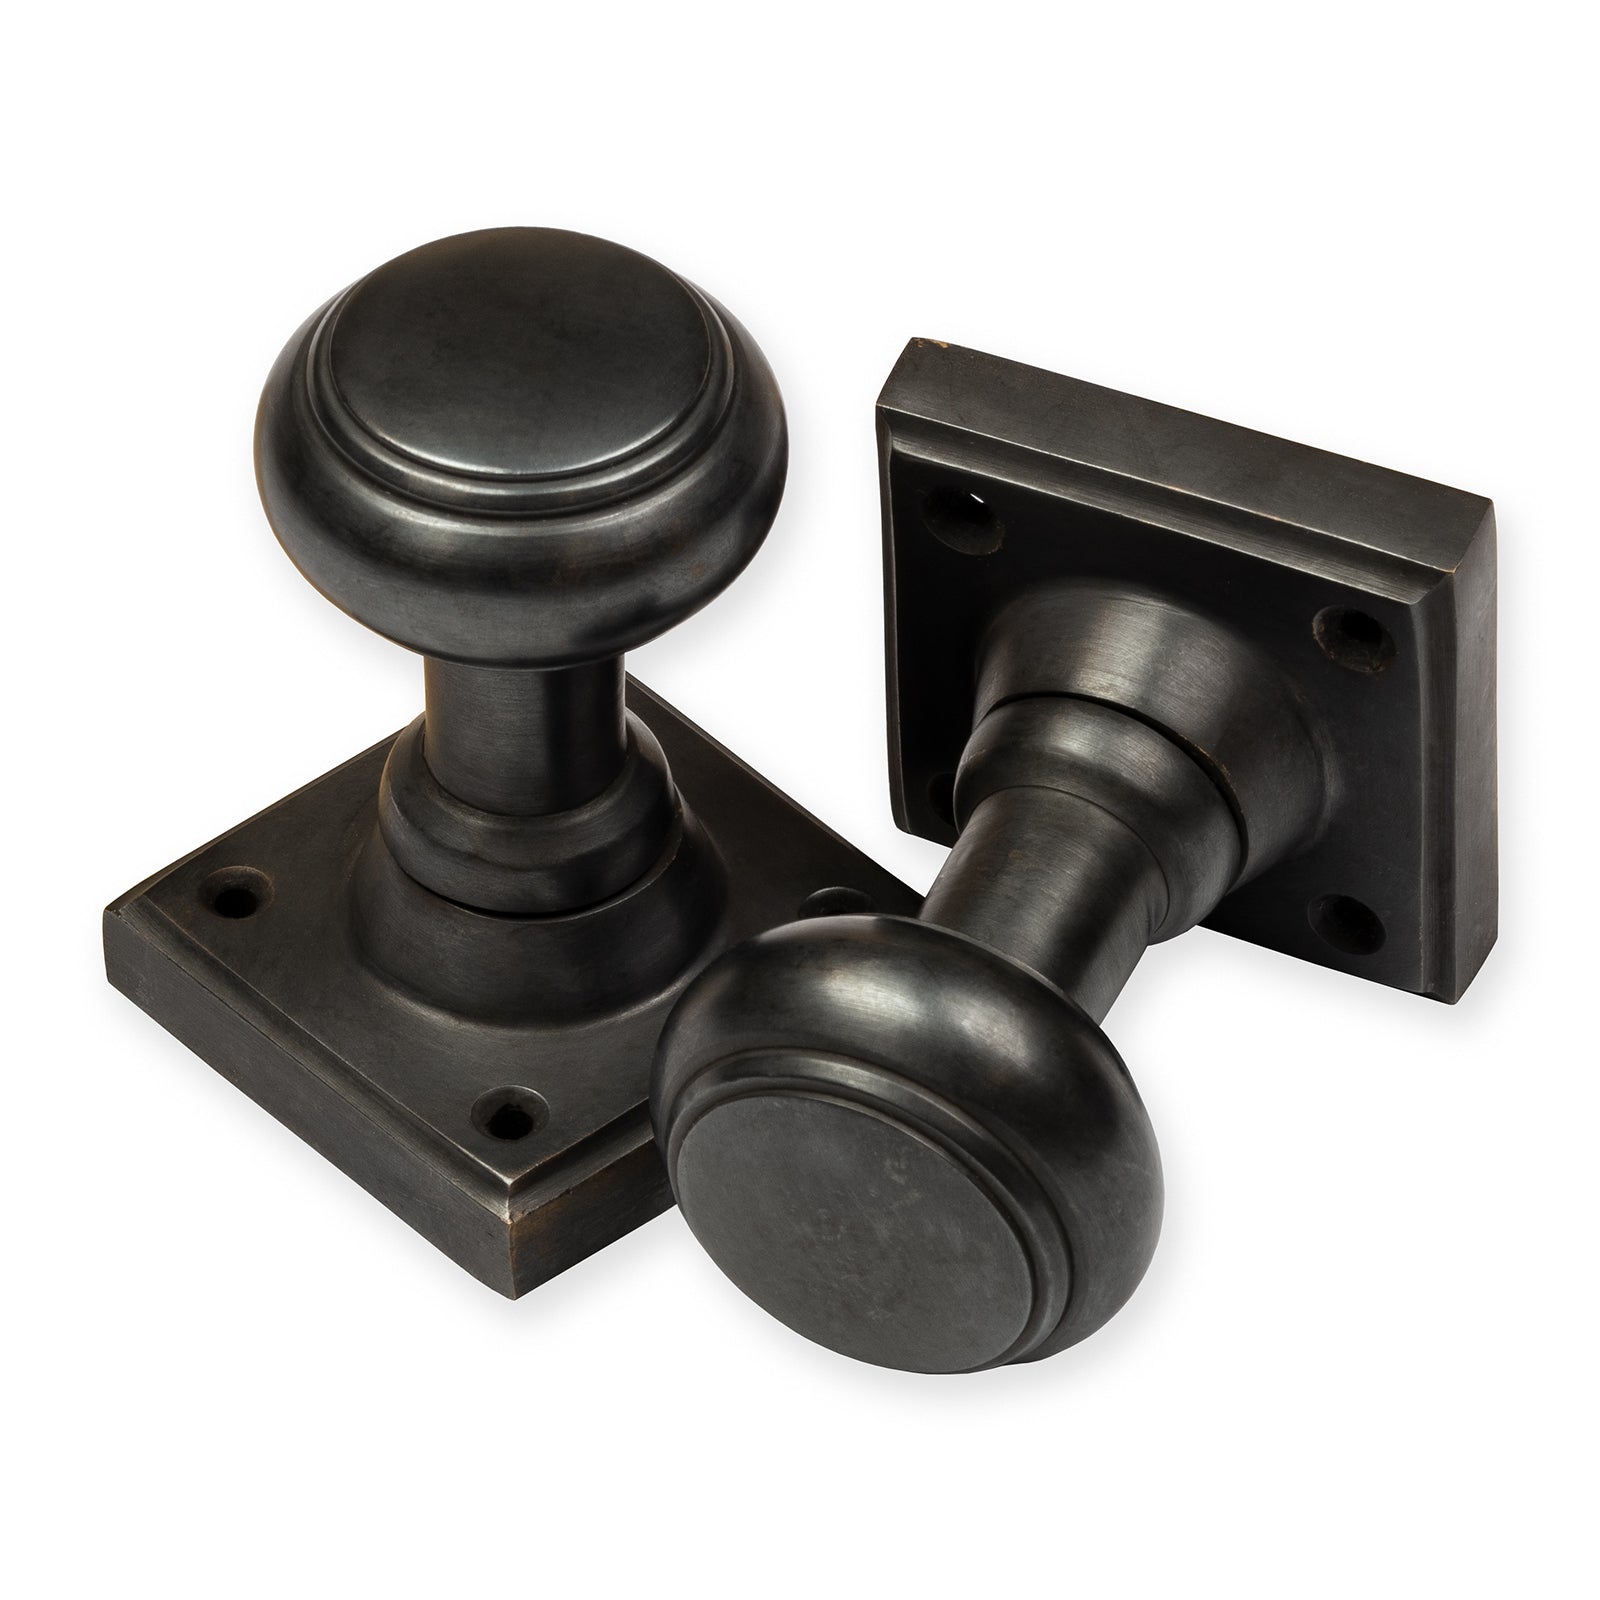 Traditional oil rubbed bronze door knobs SHOW